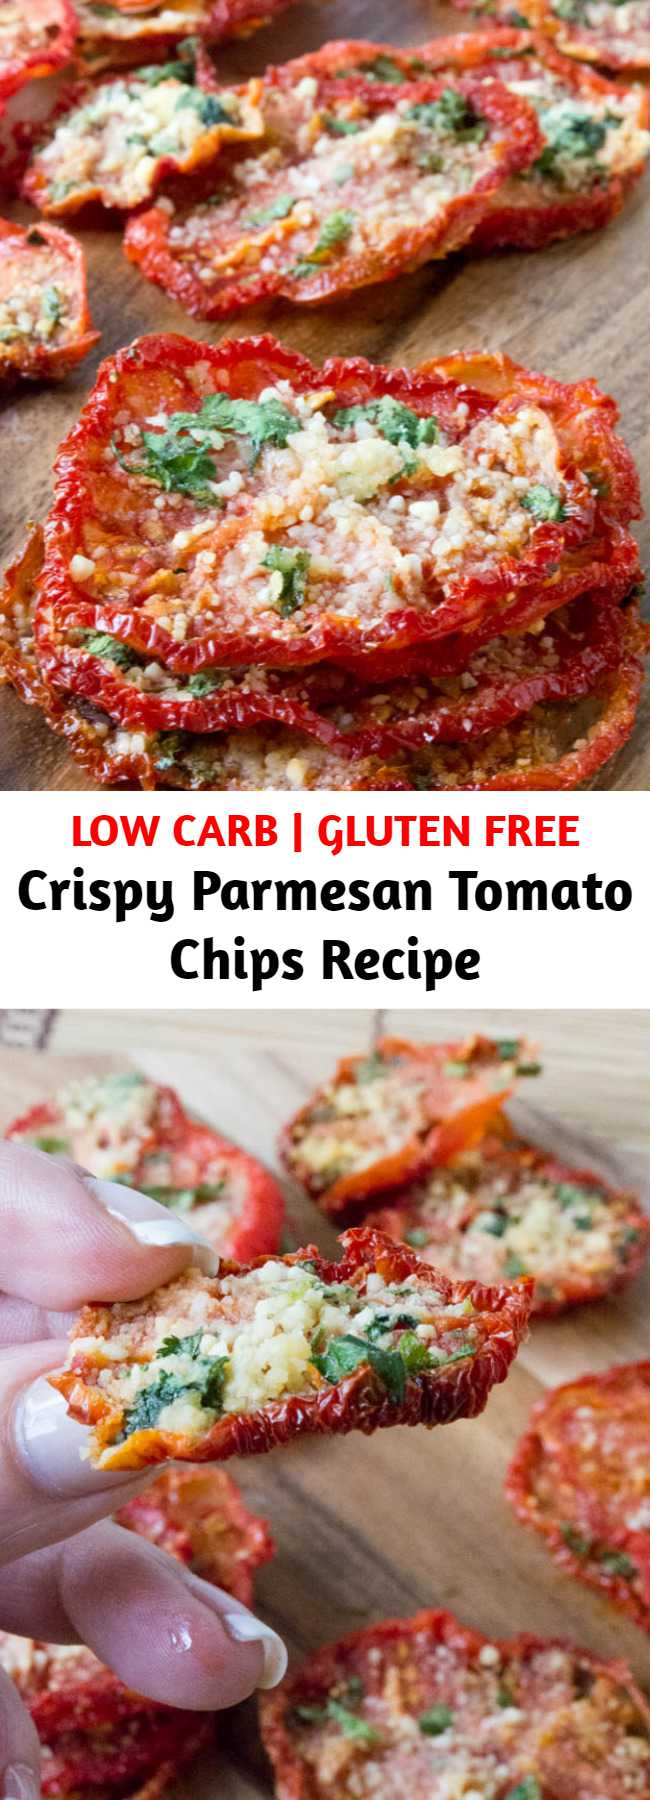 Crispy Parmesan Tomato Chips Recipe - Crispy Parmesan Tomato Chips, low carb, gluten free and amazing!